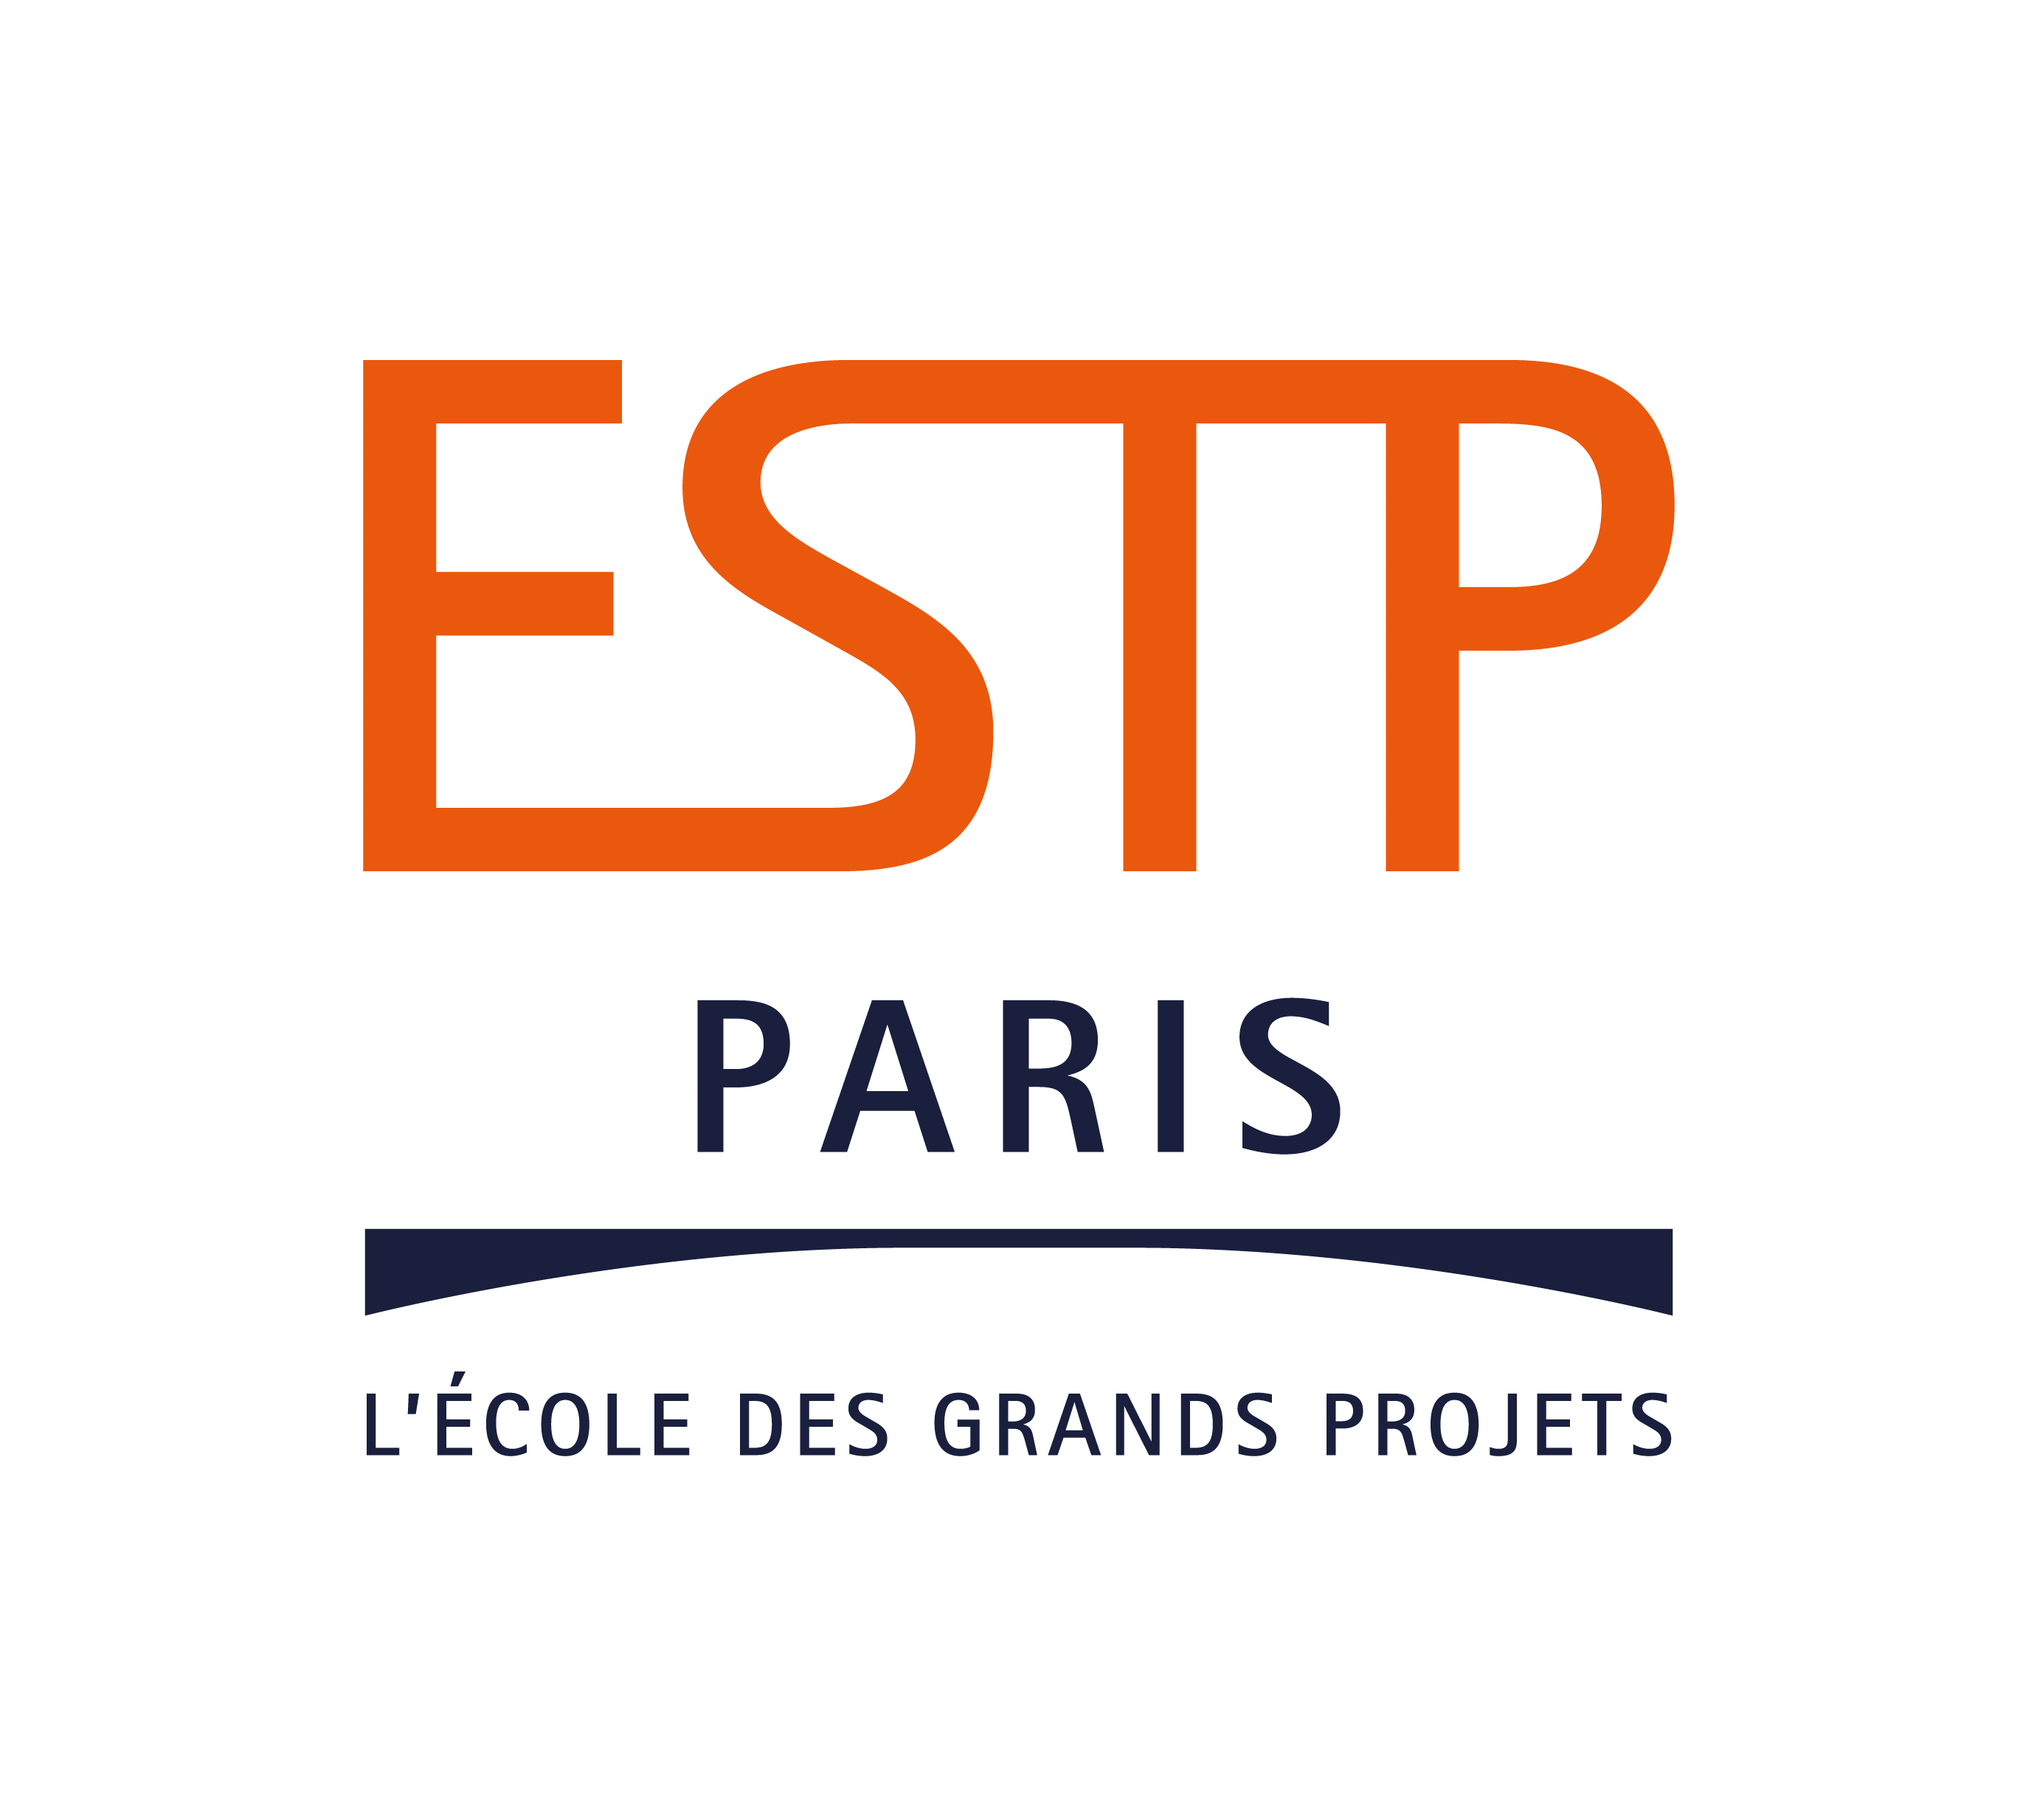 ESTP_Paris_logo